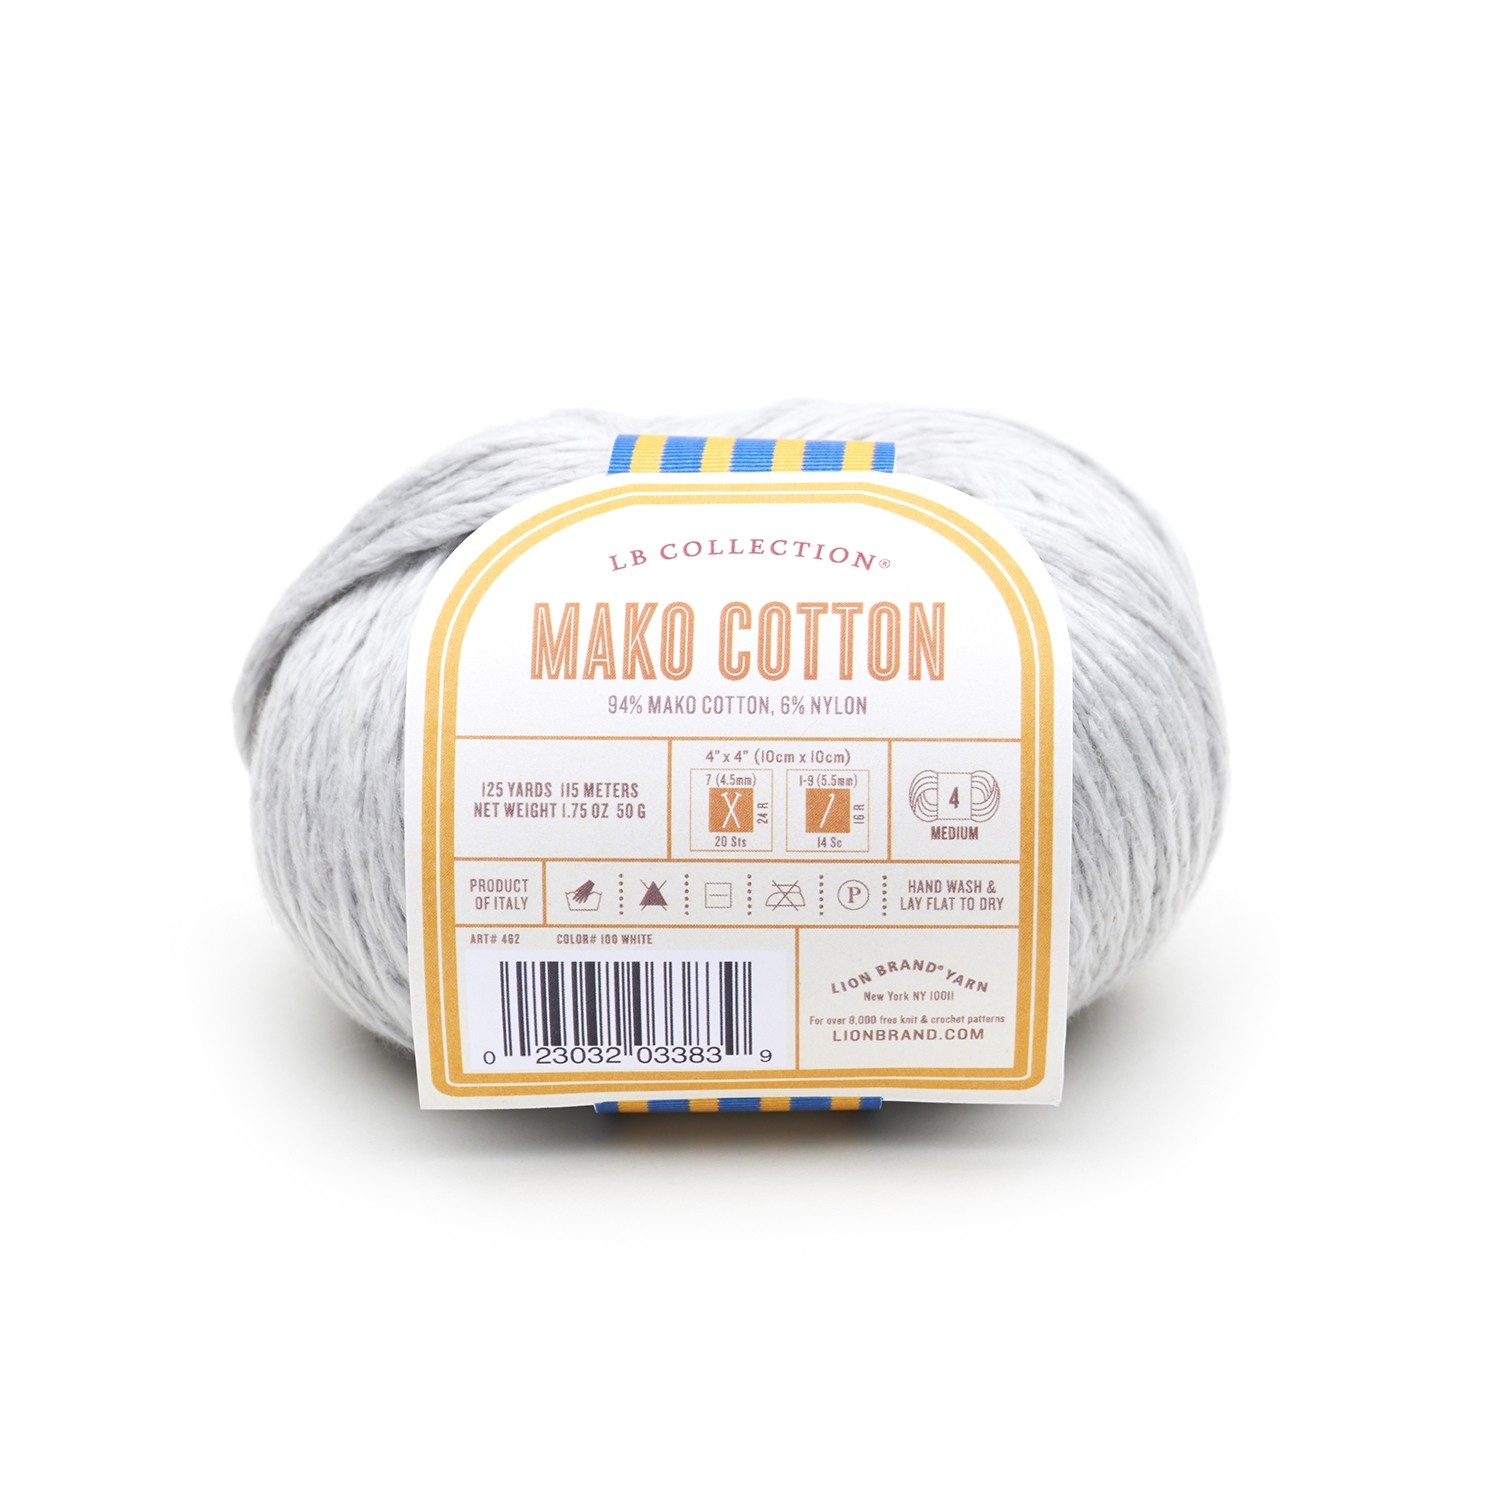 Mako Cotton in Light Grey